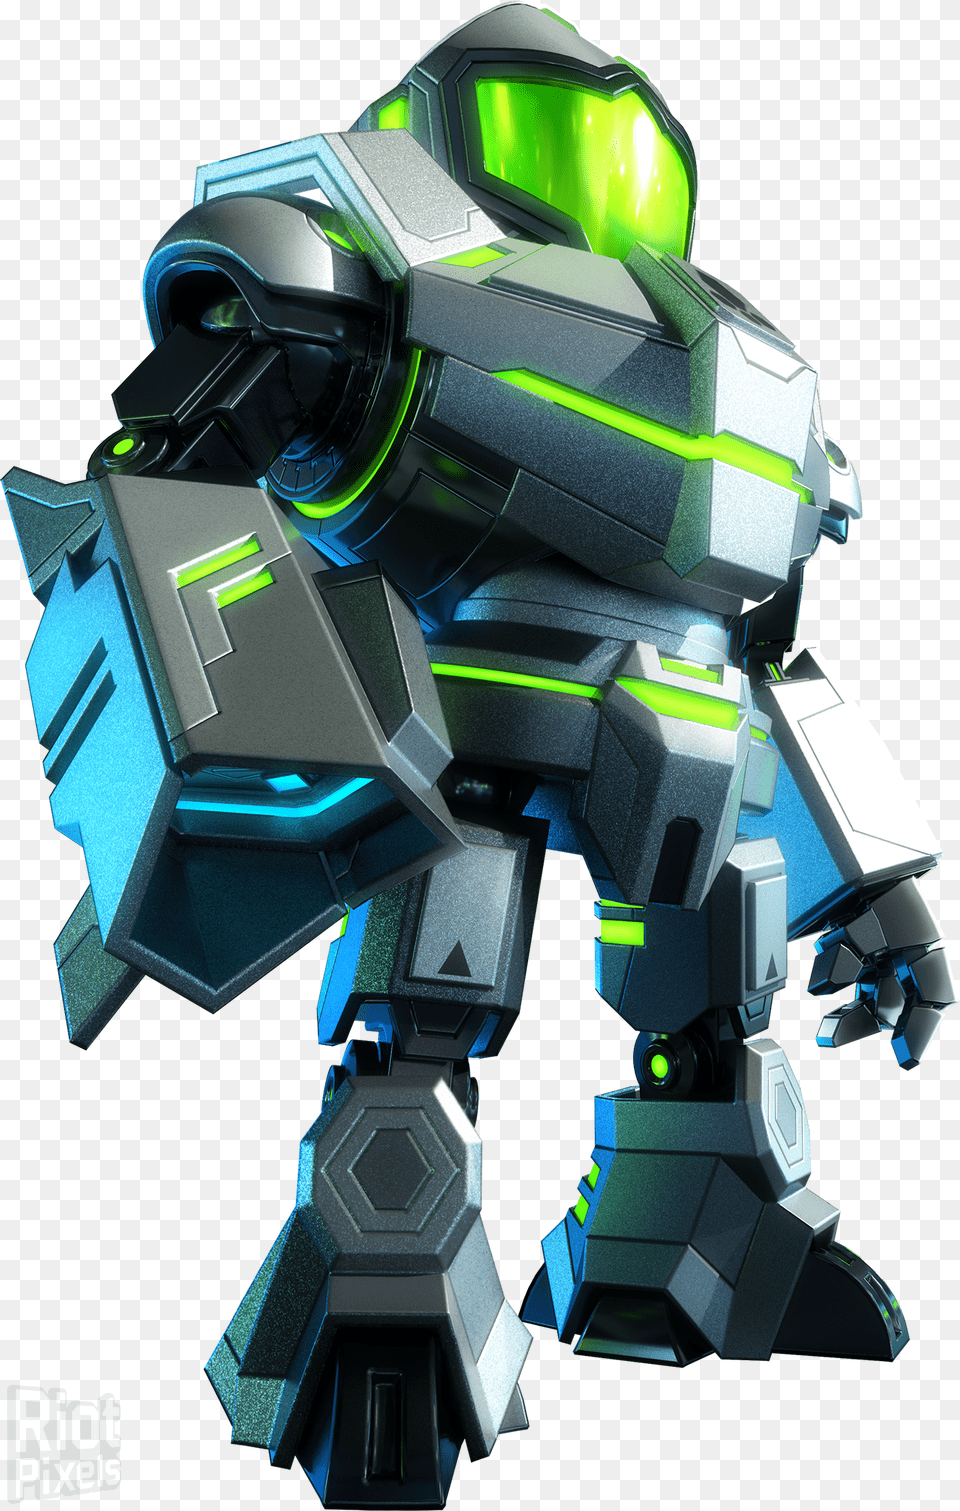 Metroid Prime Federation Force Artwork, Robot, Toy Png Image